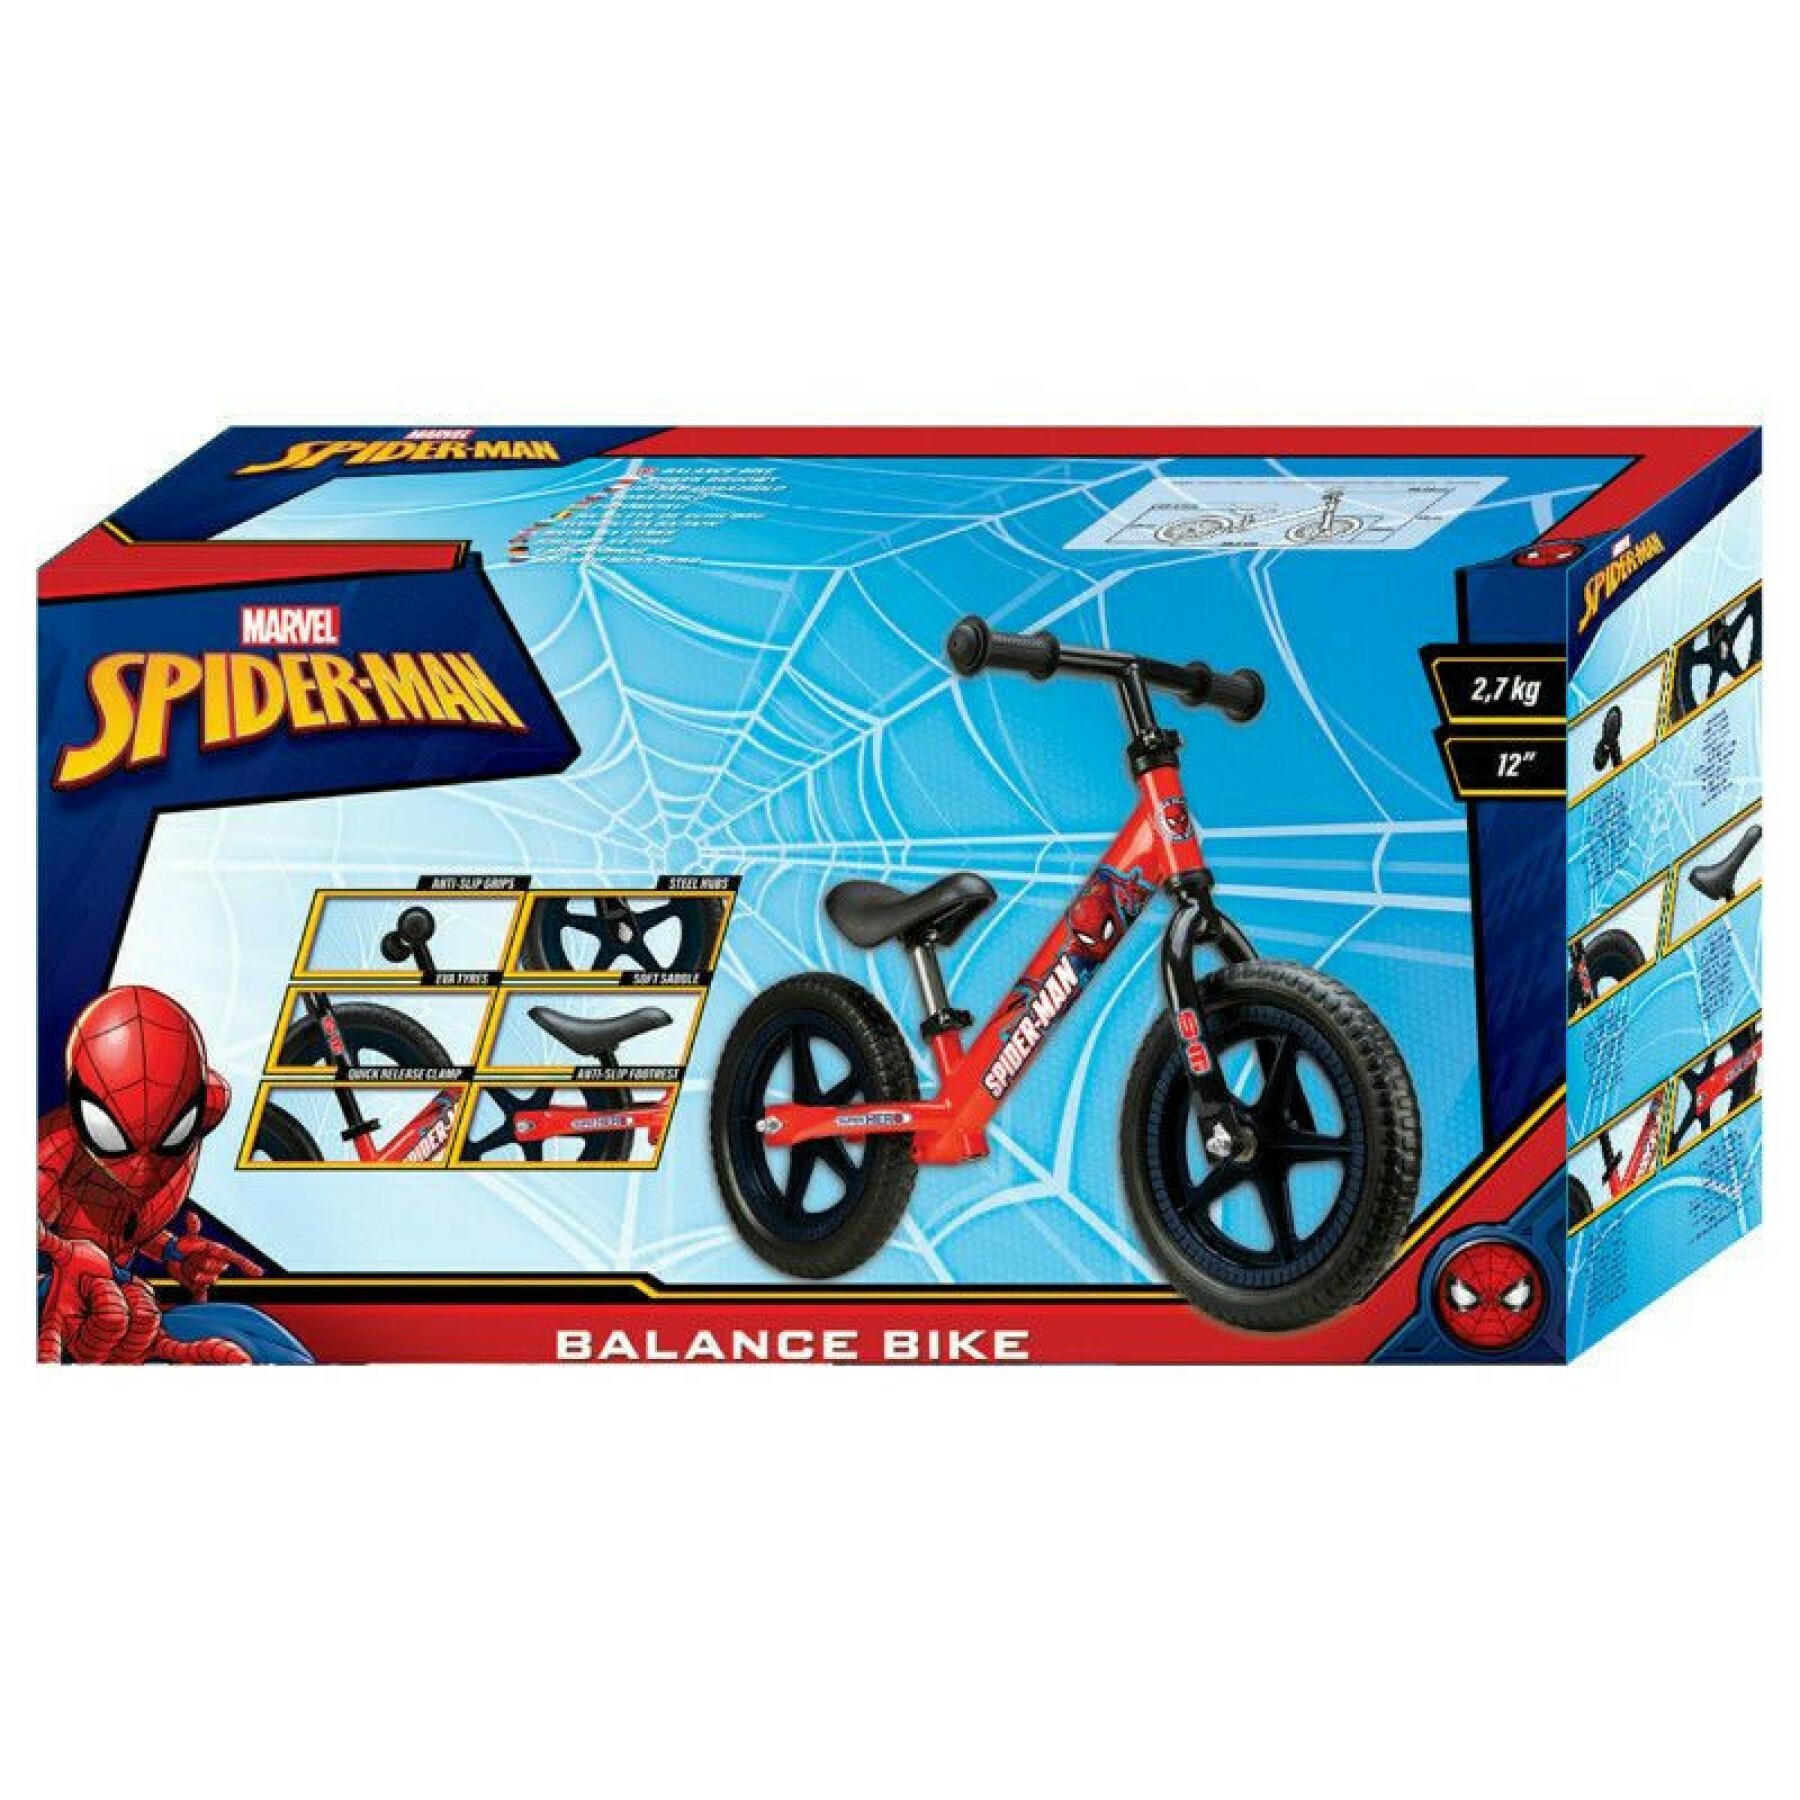 Lambreta de metal para crianças Disney spiderman